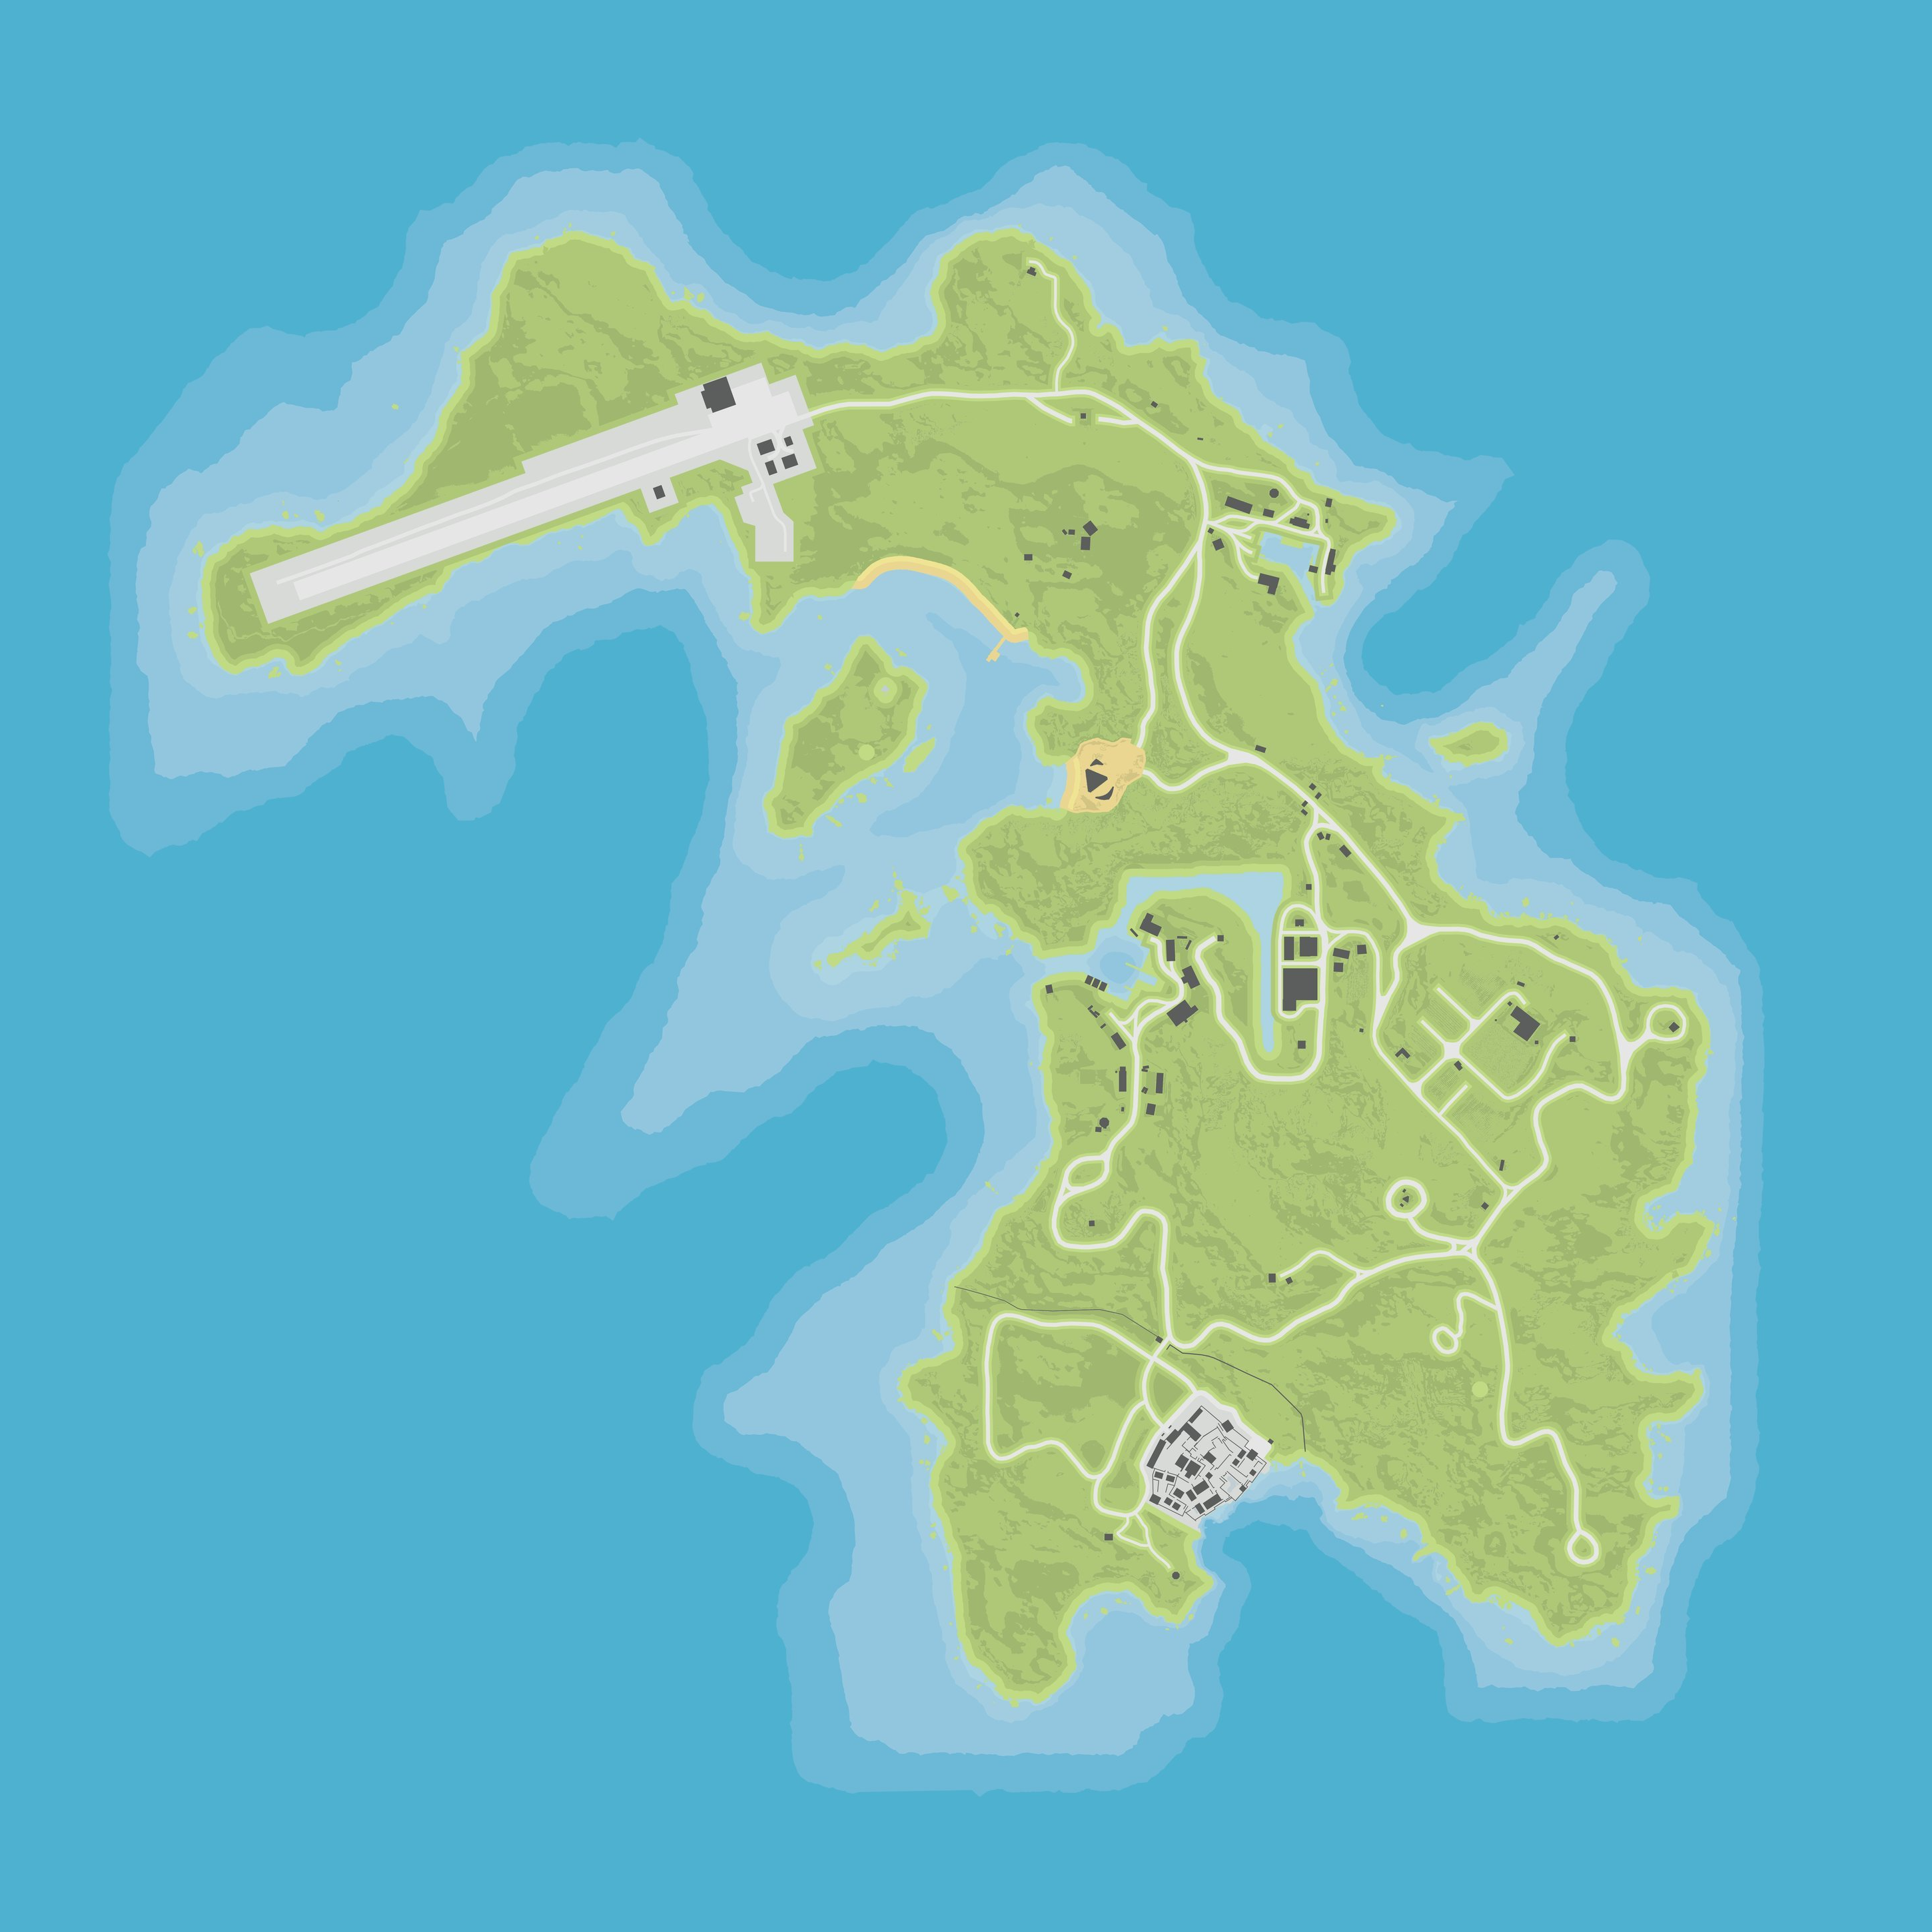 GTA Cayo Perico Island Size Compared To Full Los Santos Map